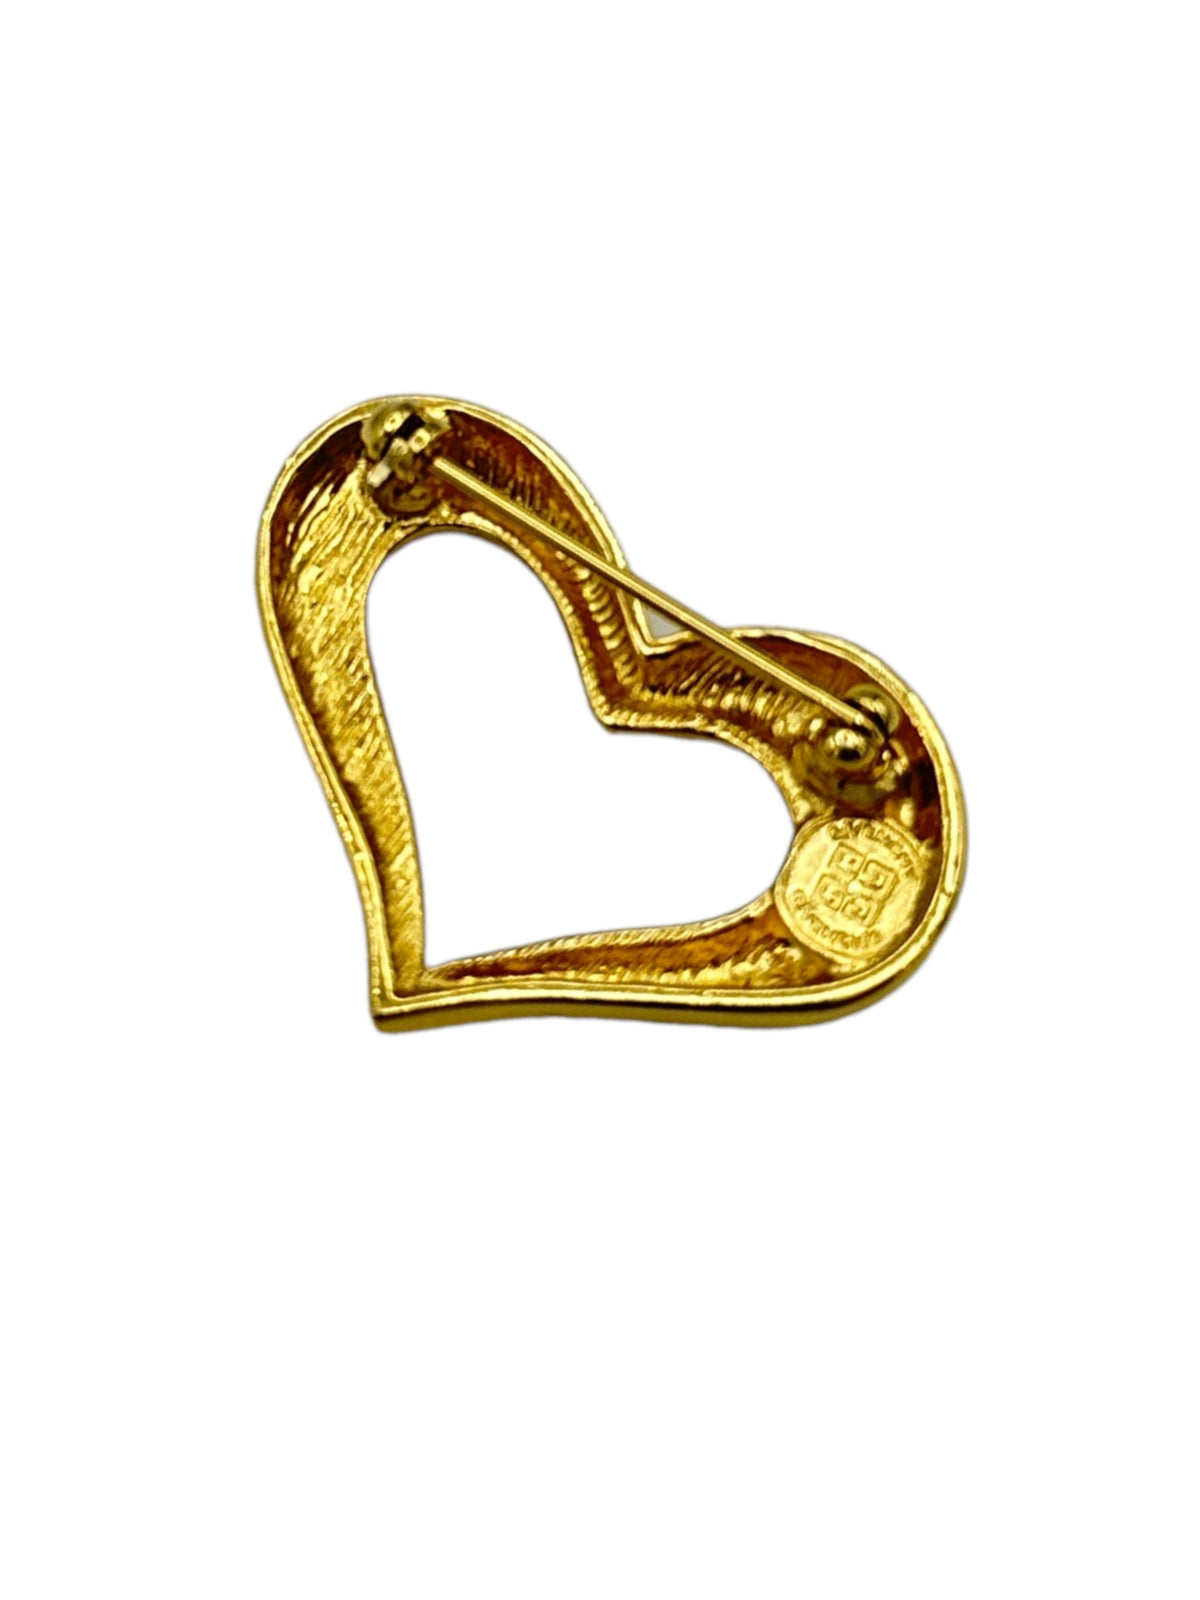 Givenchy Open Heart Brooch Rhinestone Embellishment Pin